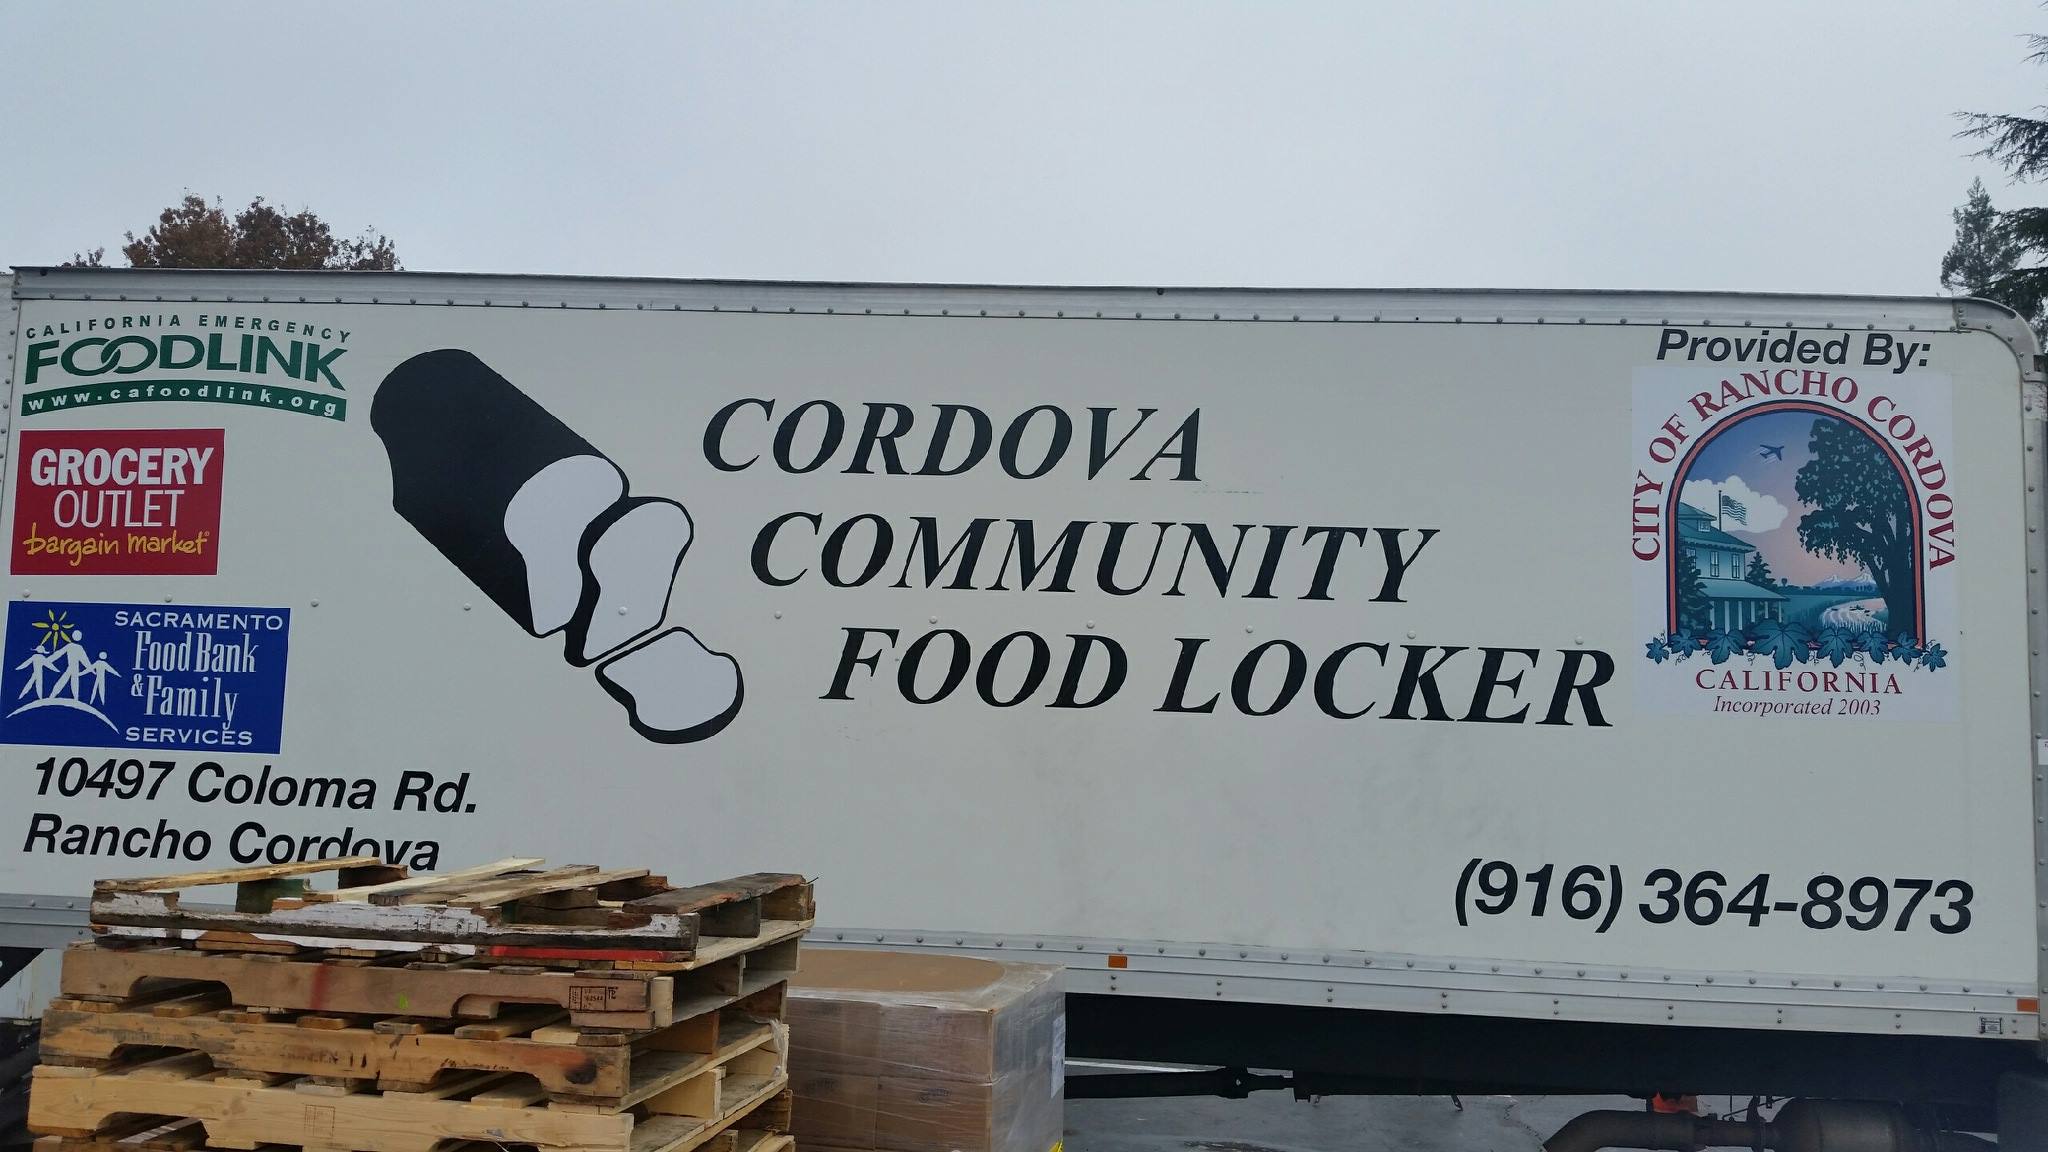 Cordova Community Food Locker